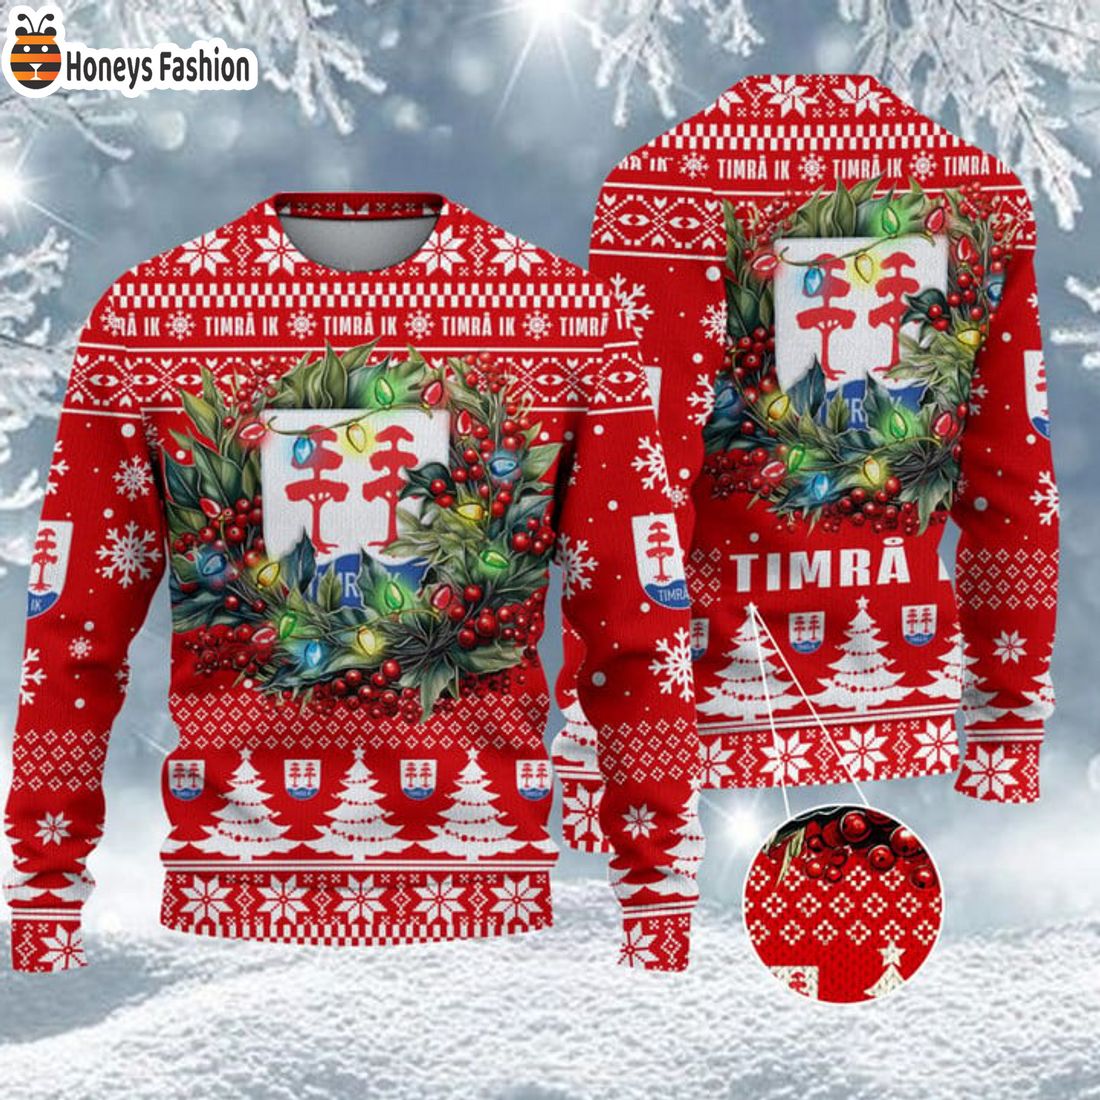 TRENDING Timra IK SHL & HockeyAllsvenskan Ugly Christmas Sweater